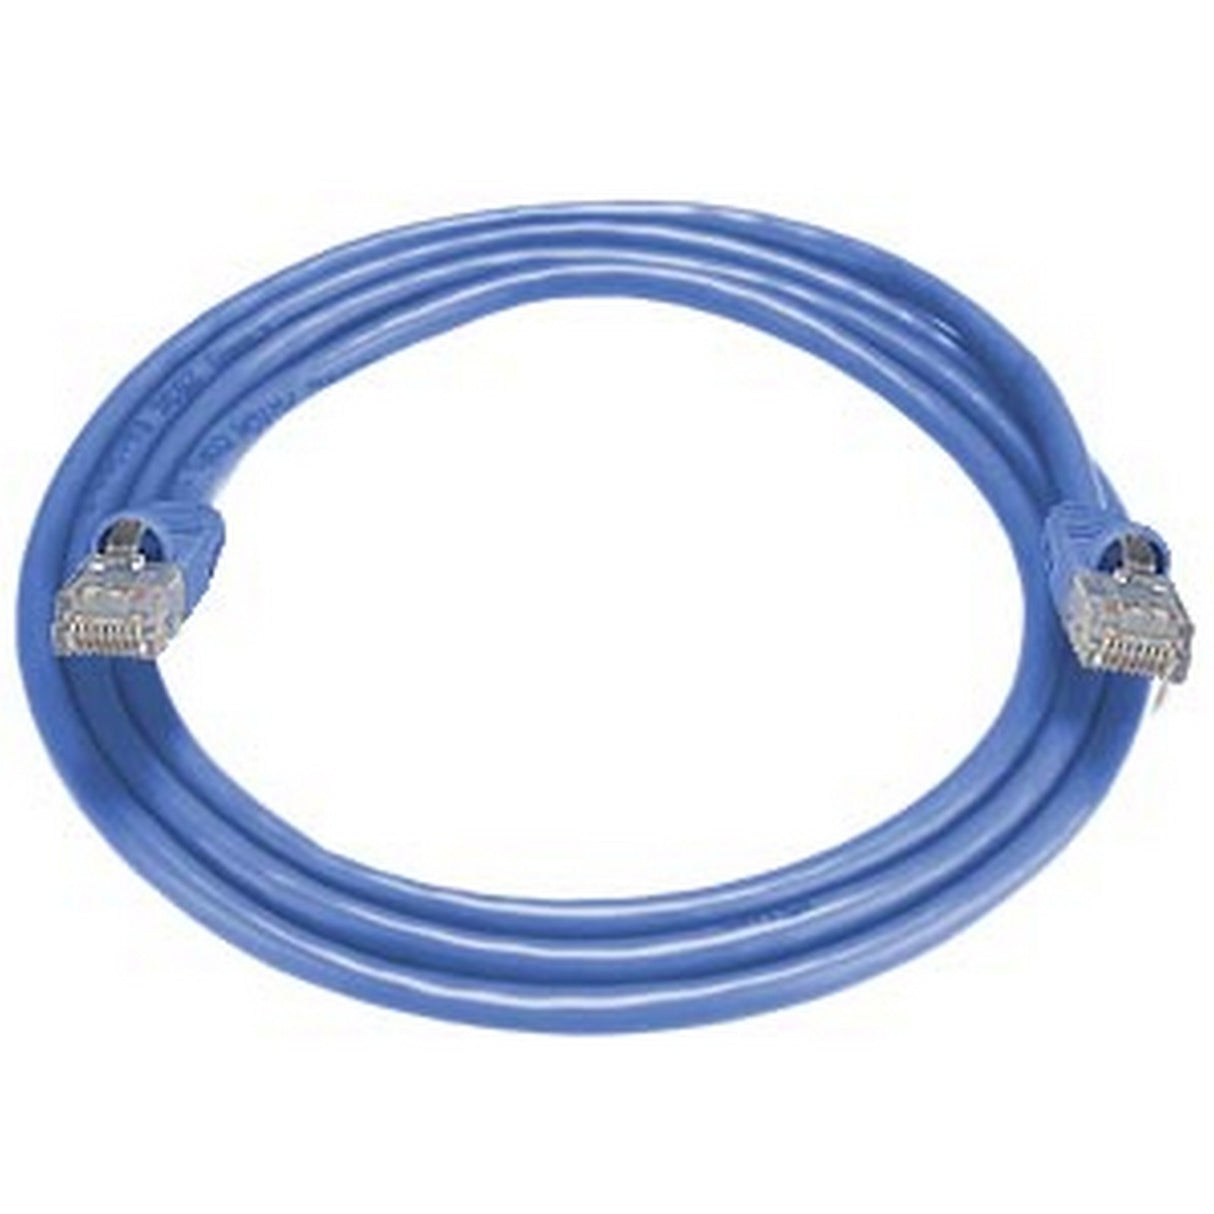 NTI CAT5E-5-BLUE CAT5e Stranded Unshielded Cable, Blue, 5-Foot